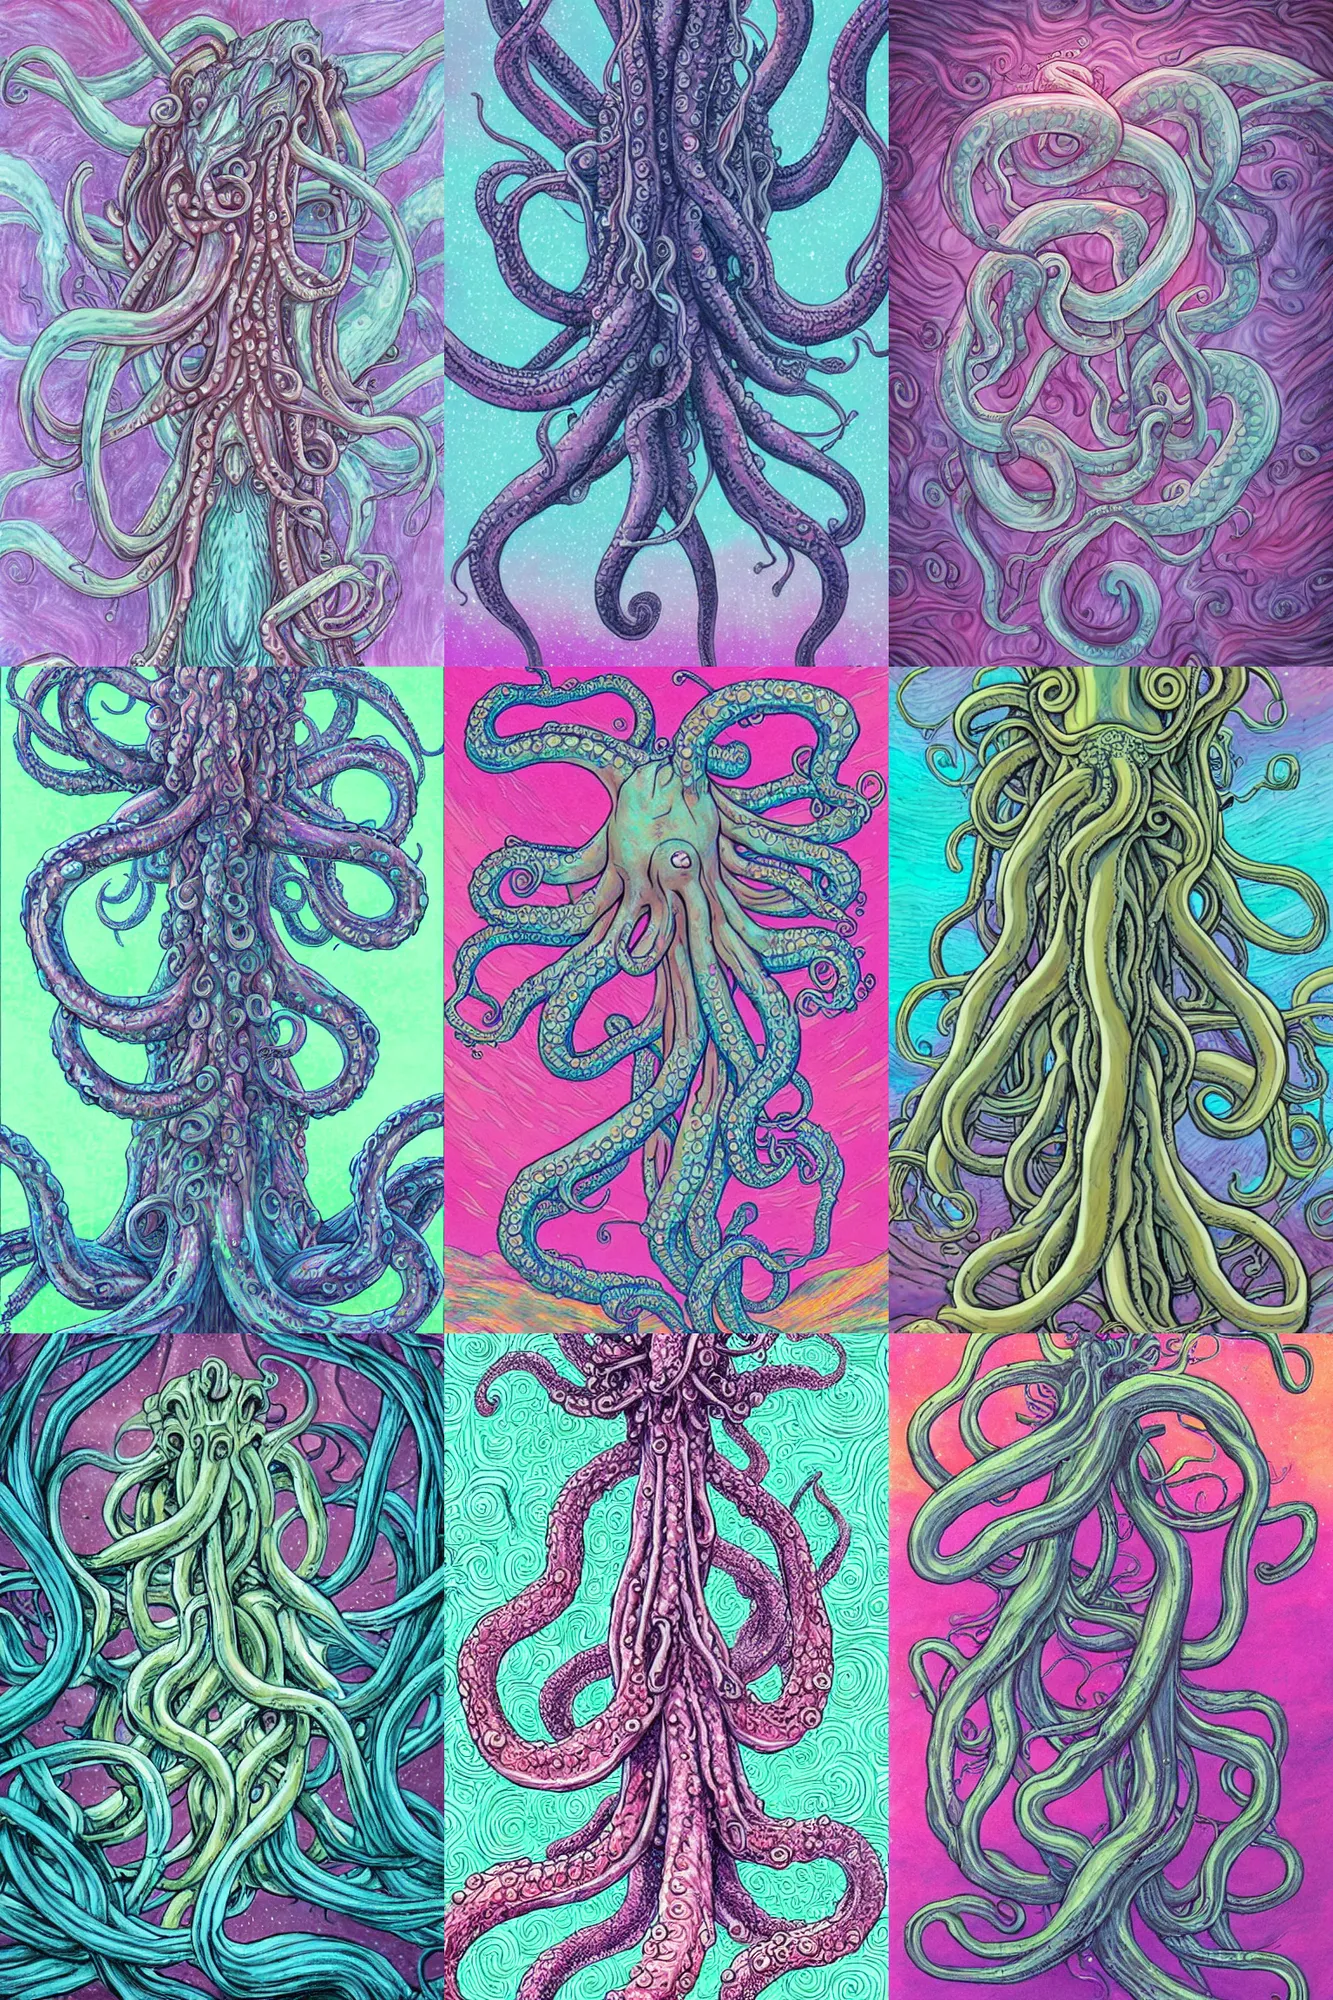 Prompt: giant ancient alien tentacles artwork, pastel colors, detailed background